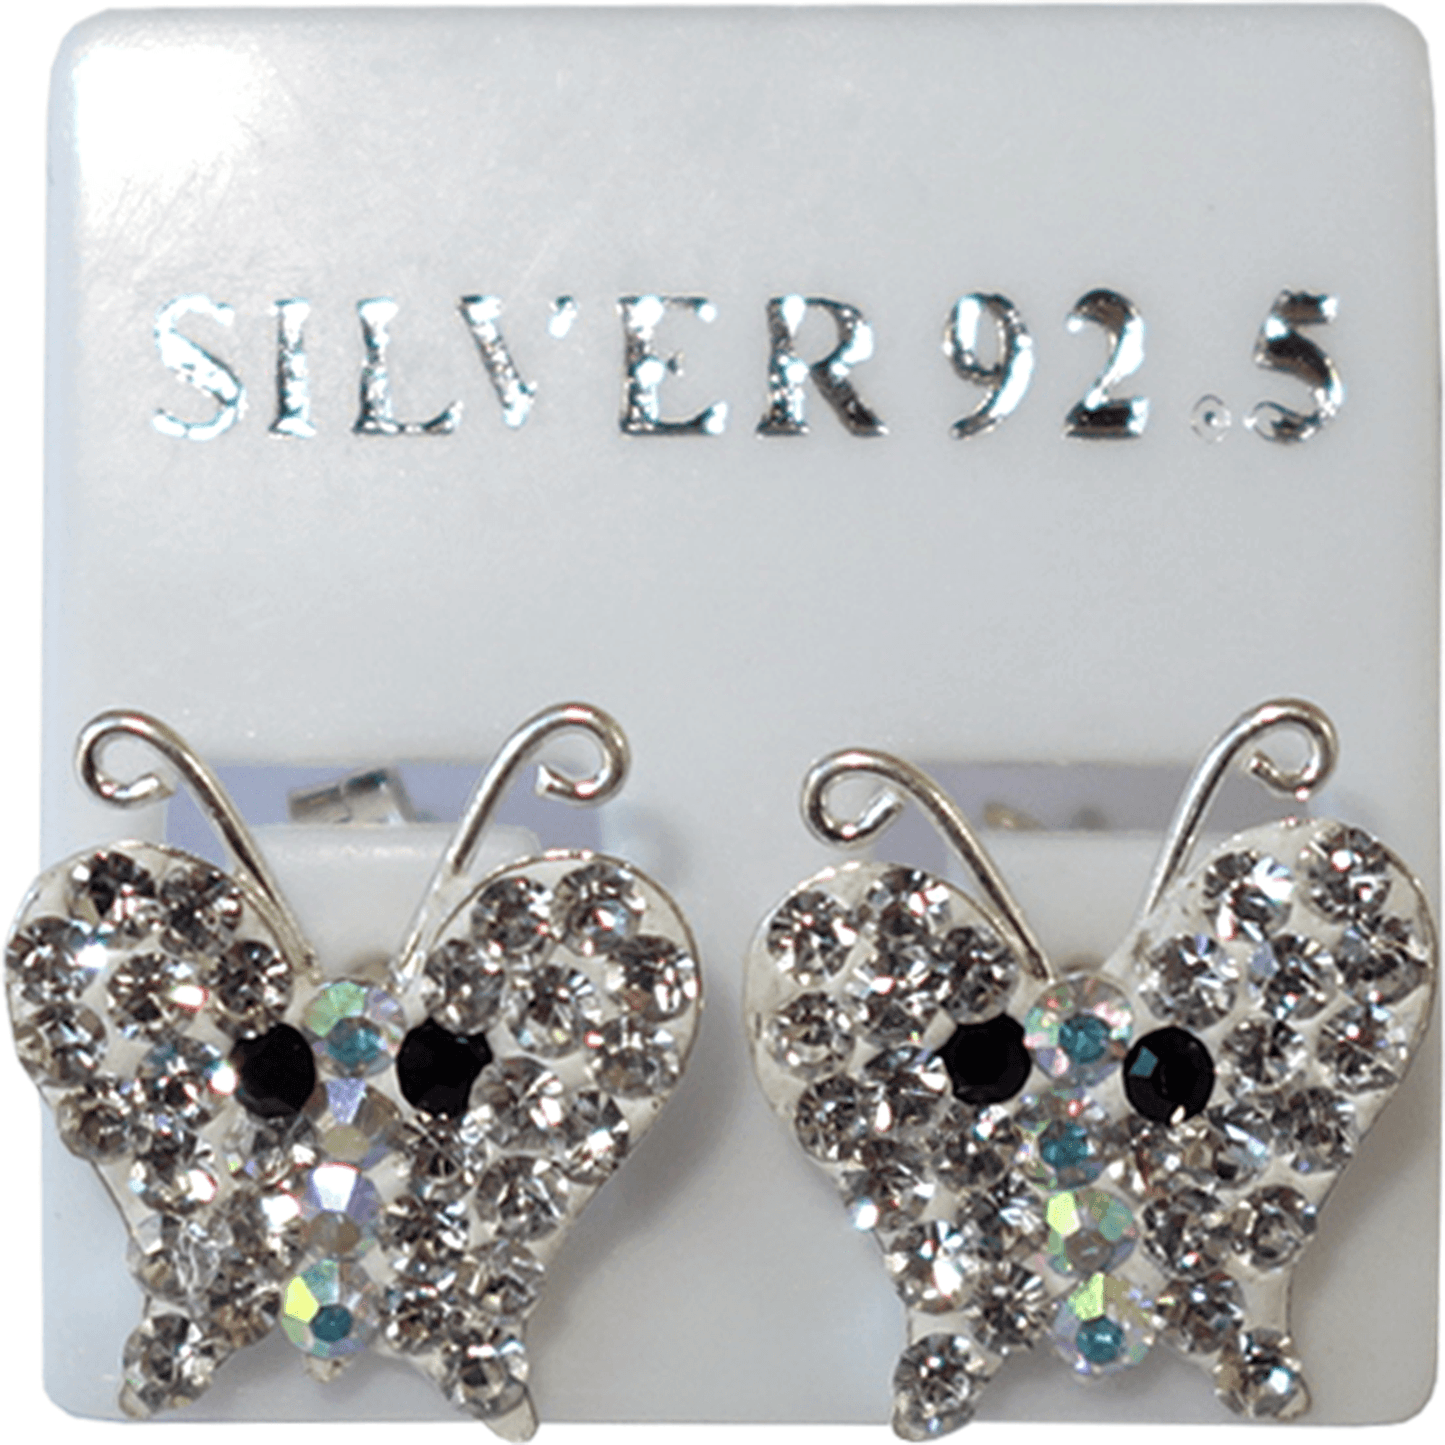 Pair of 925 Sterling Silver Crystal Butterfly Stud Earrings Ear Studs Jewellery